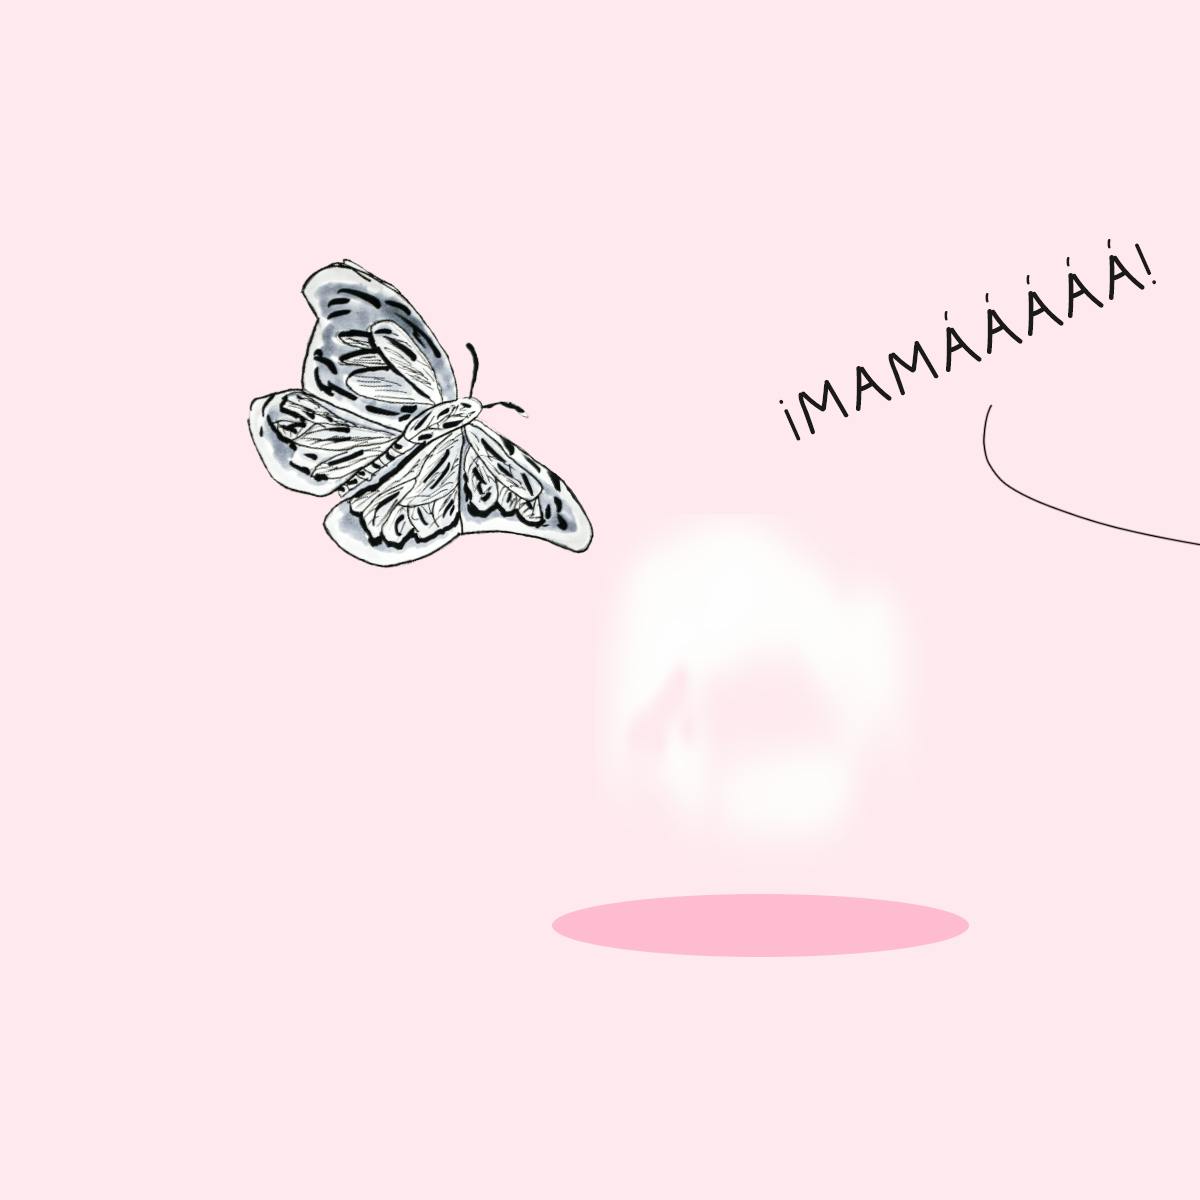 Garitma, Mariposa gigante, cómic dibujo marcador sobre papel